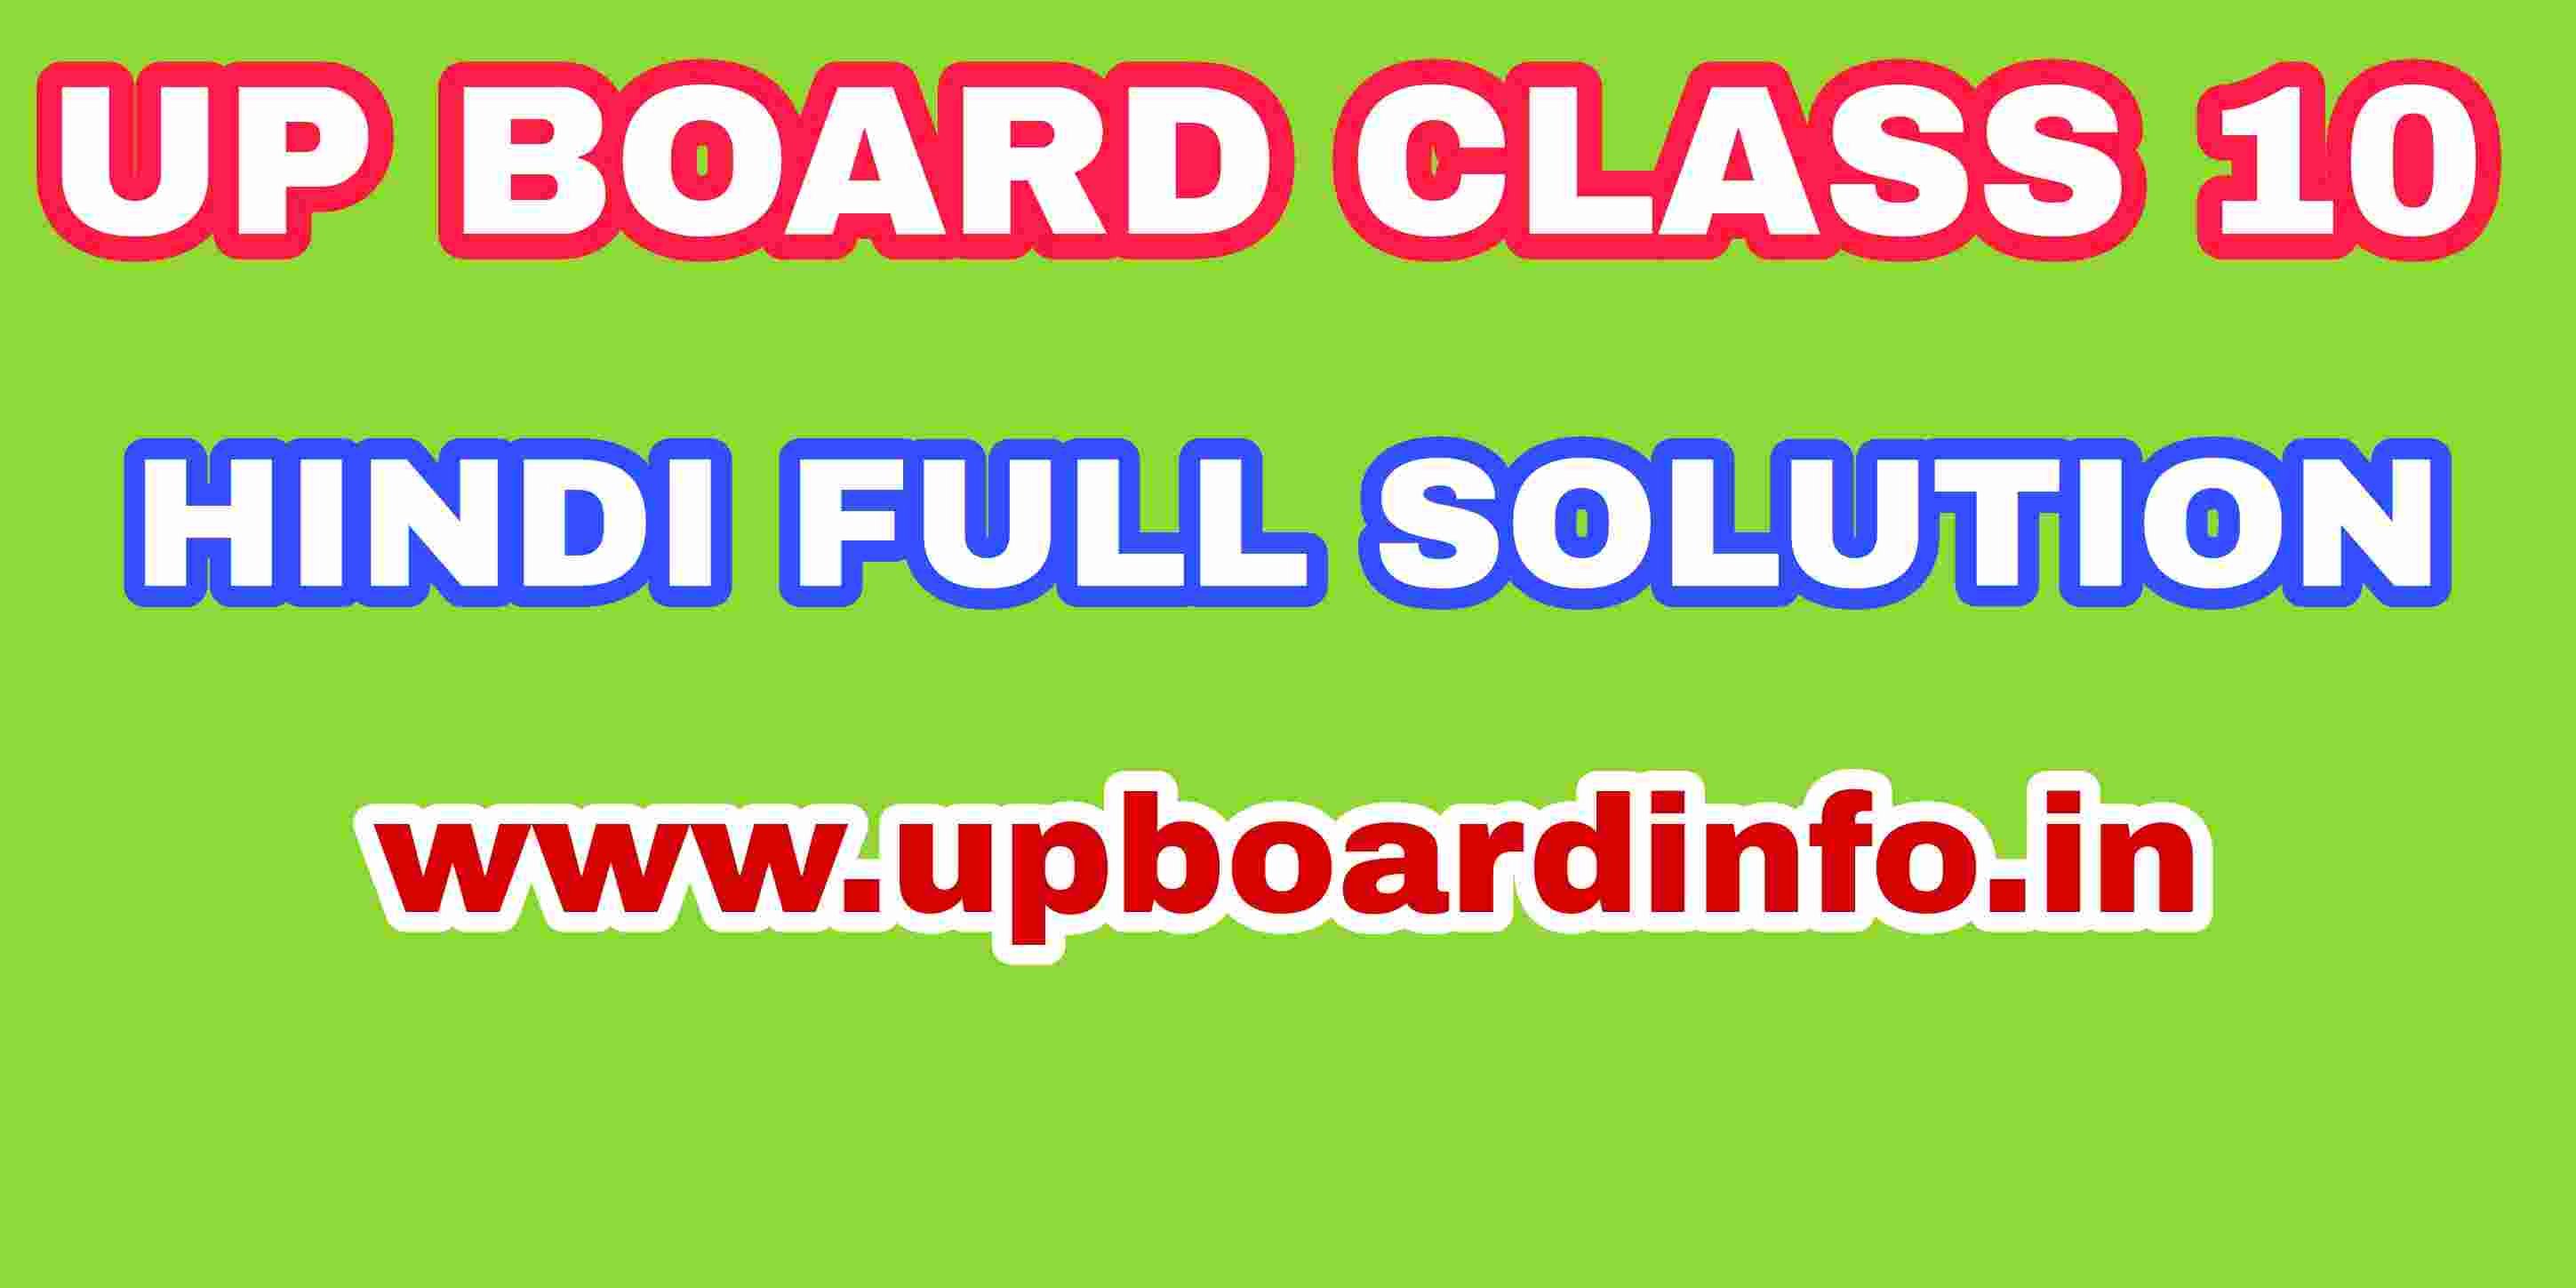 Up board class 10 hindi solution chapter 4: ईर्ष्या तू न गई मेरे मन से